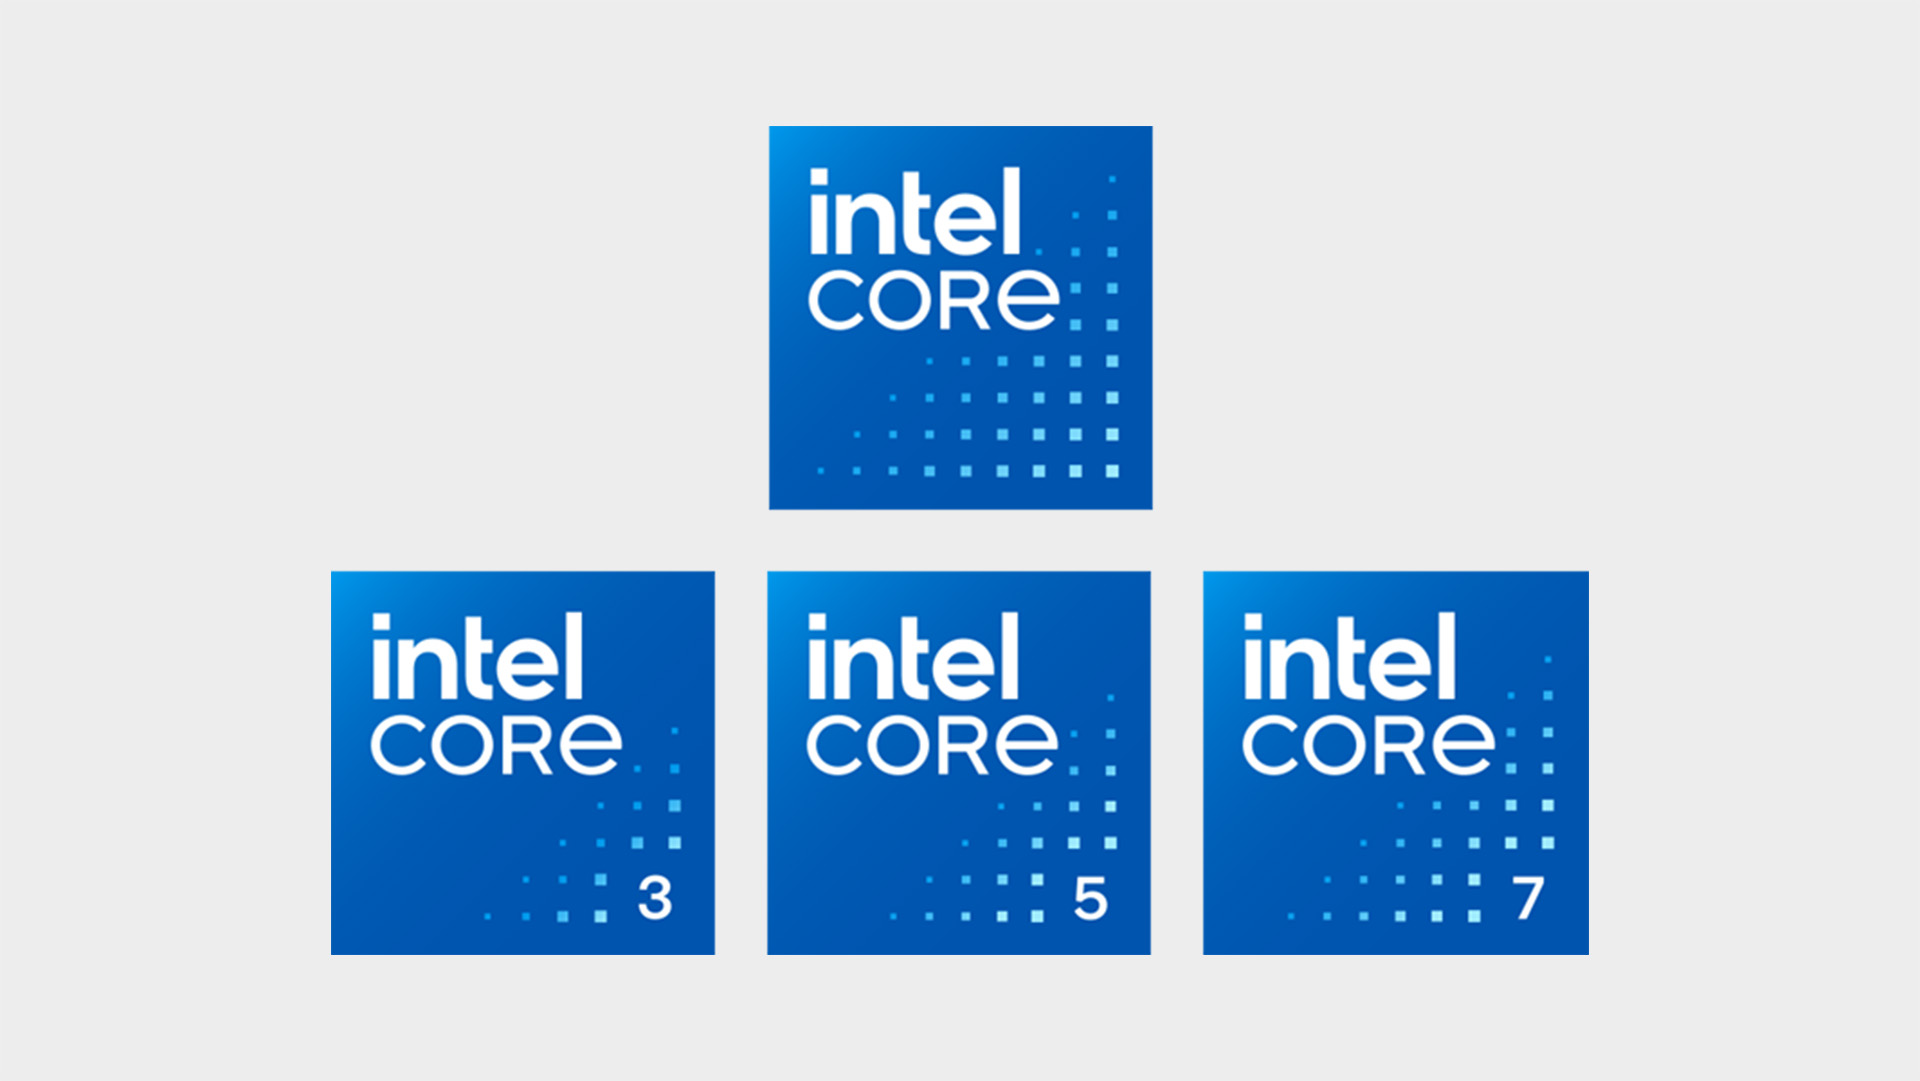 Intel's new Core branding badges.